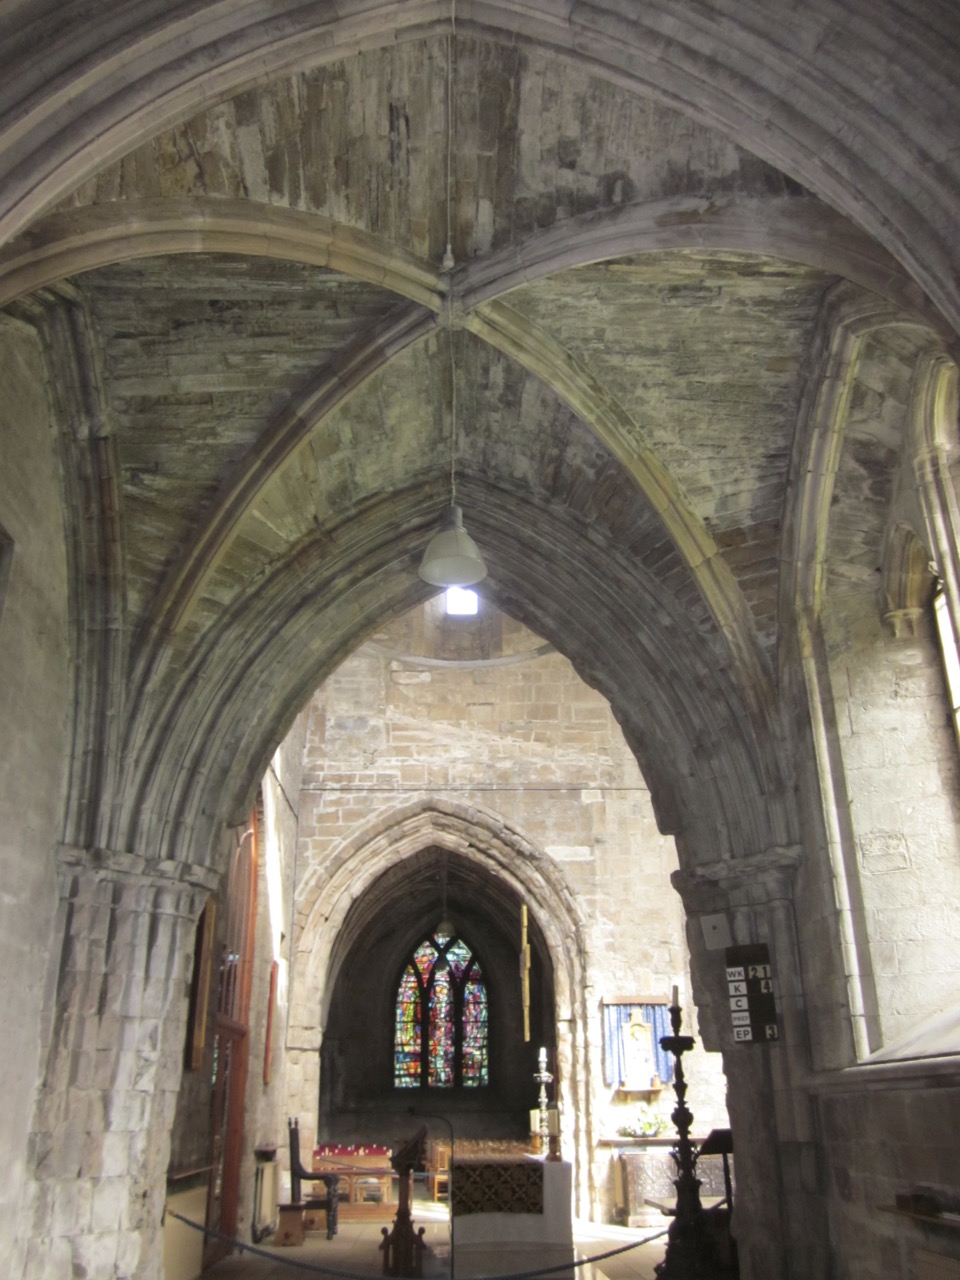 Pluscarden Abbey, interior view